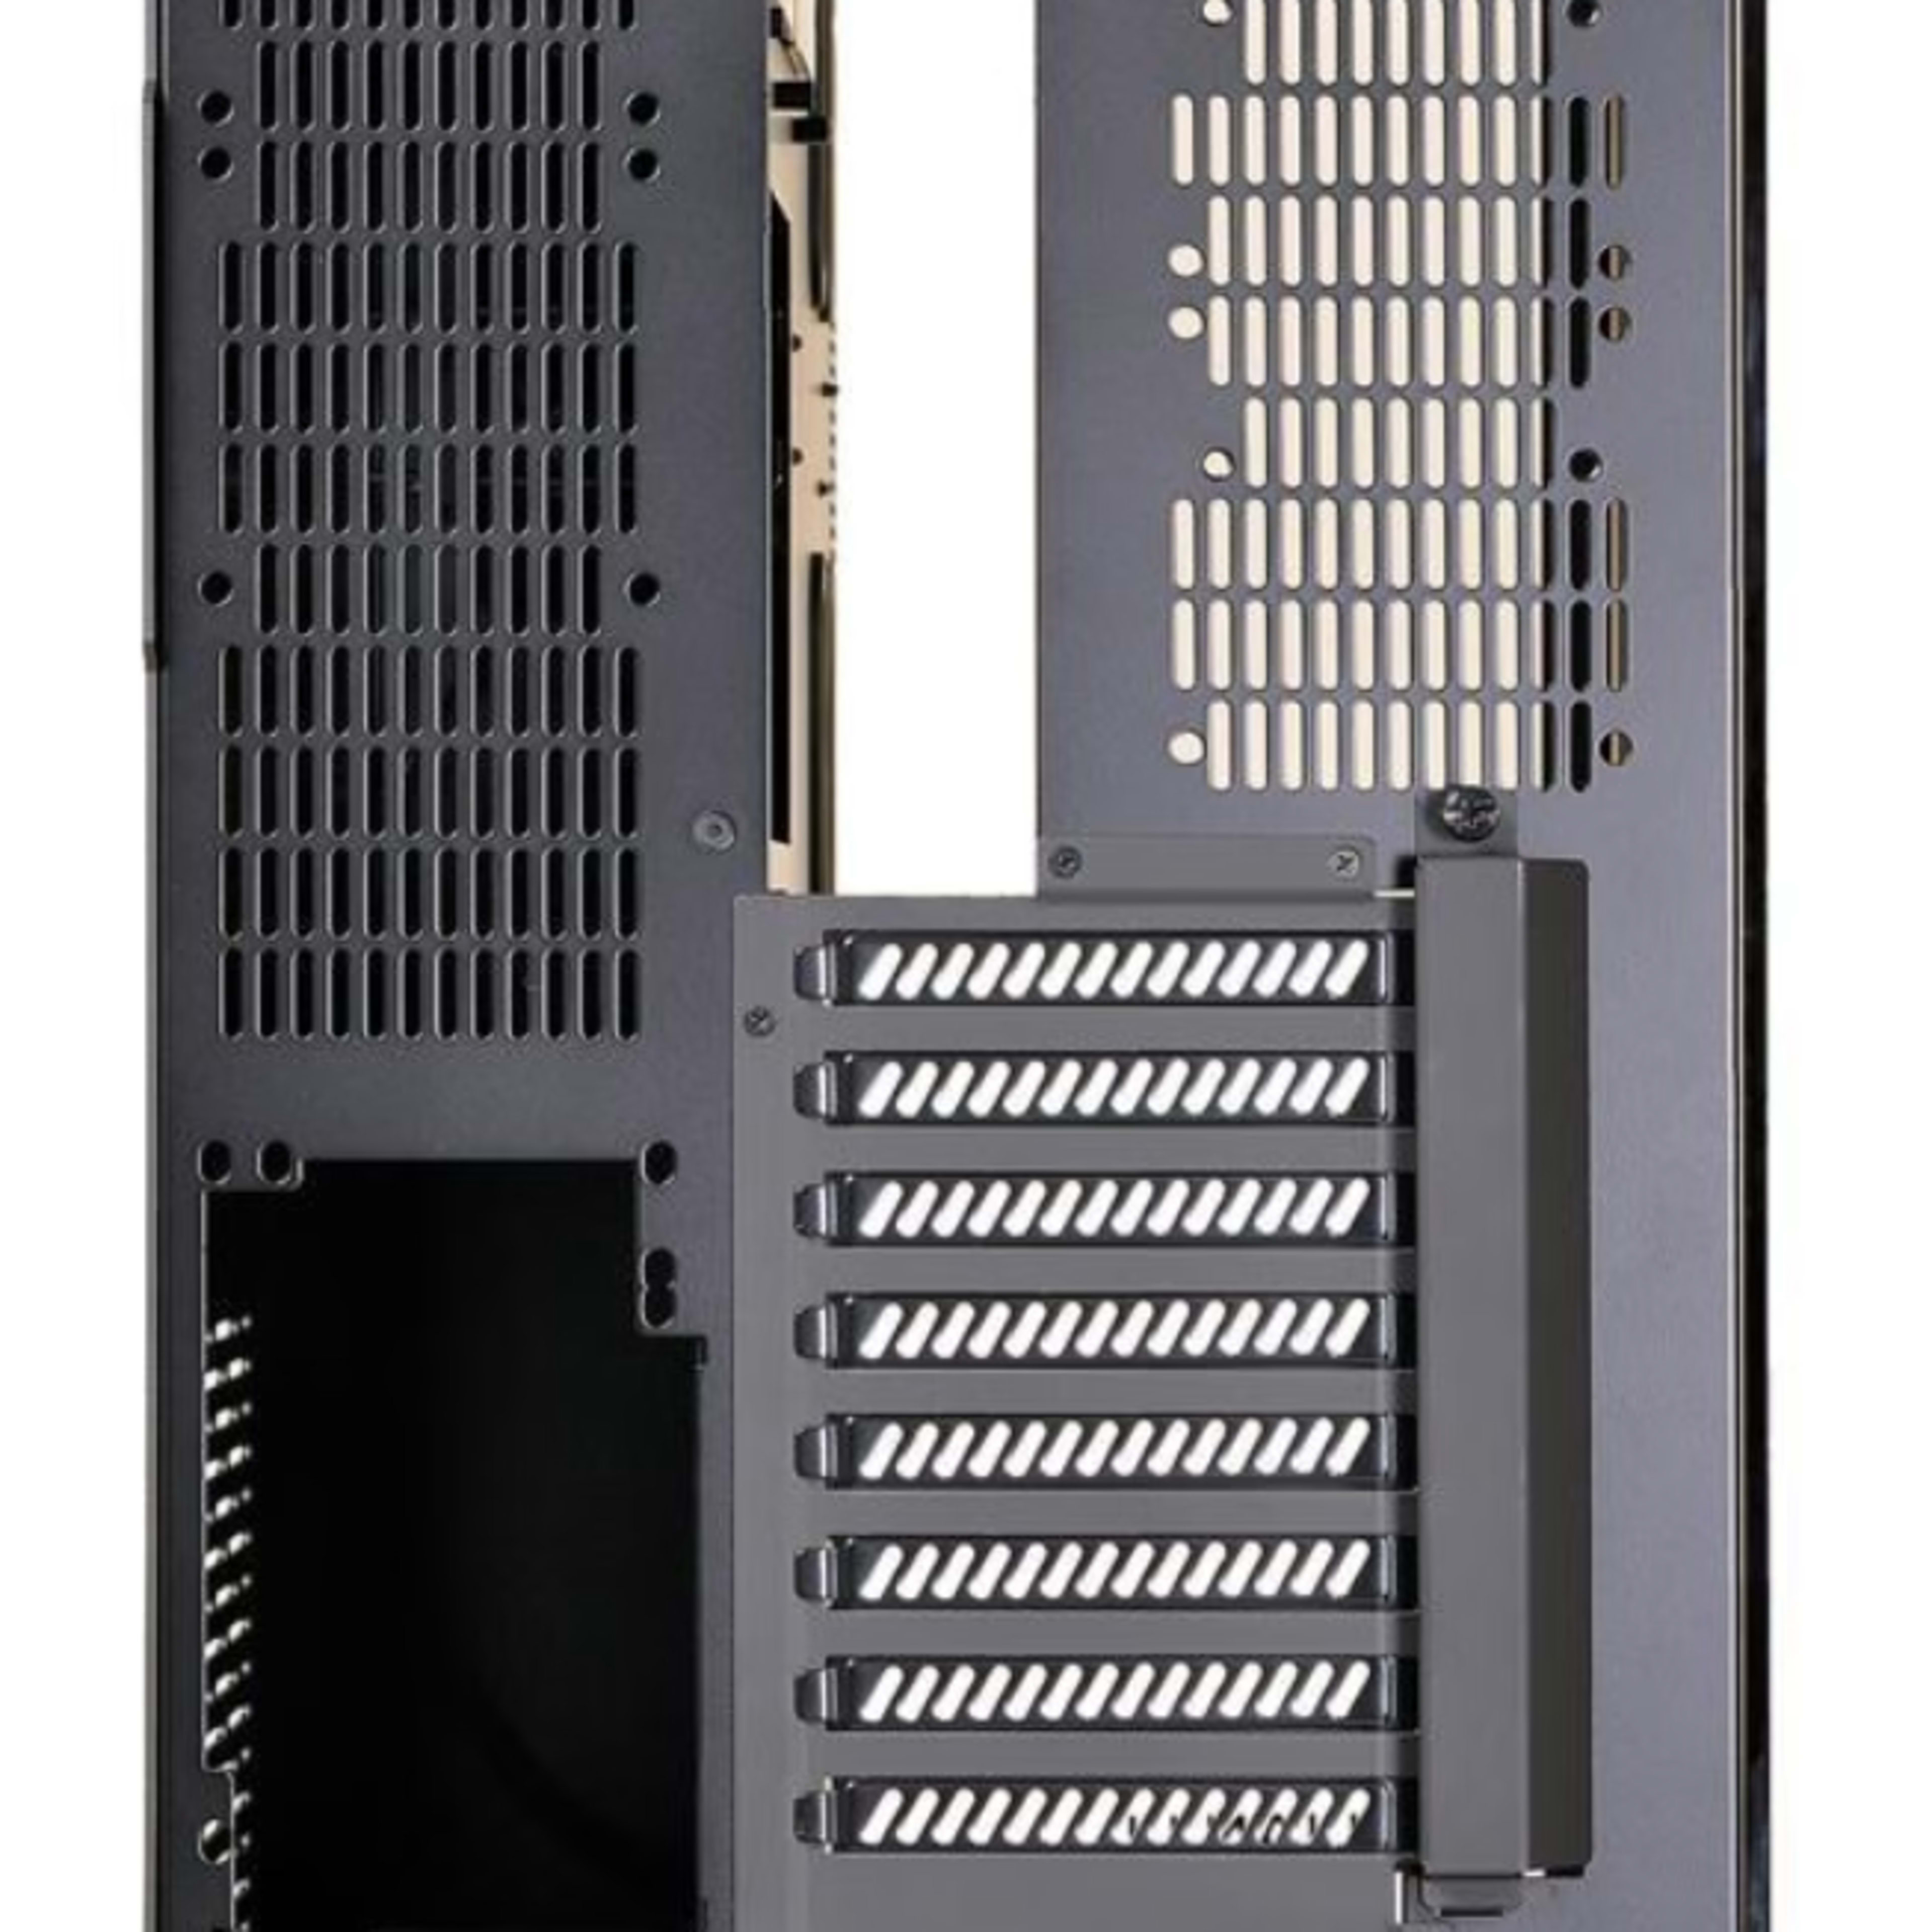 NEW LIAN LI PC-O11 WGX ROG Certified Edition Computer Case (Black Aluminum, Steel & Tempered Glass)